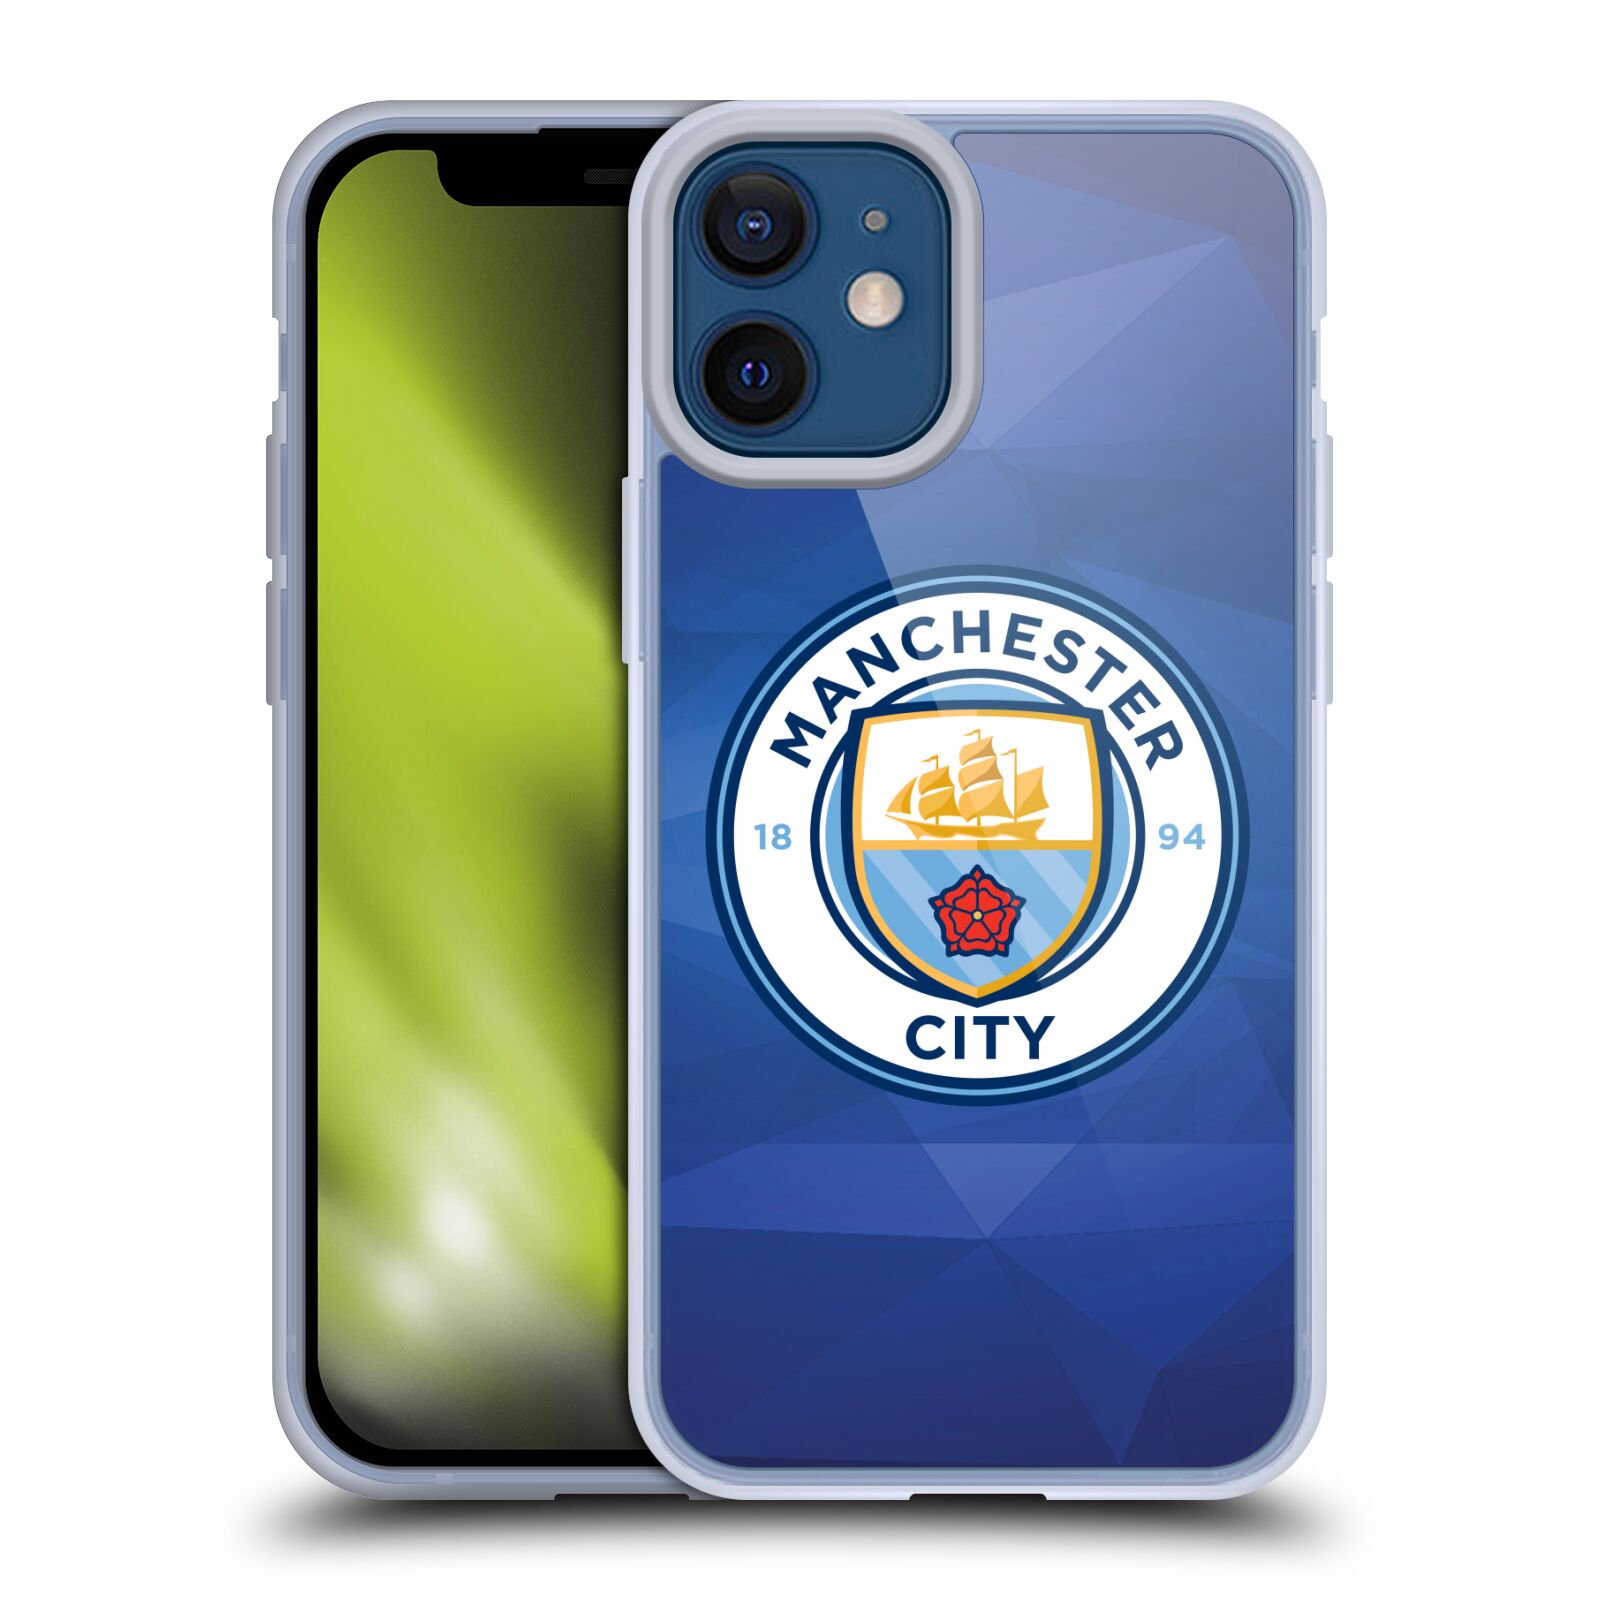 Silikonové pouzdro na mobil Apple iPhone 12 Mini - Head Case - Manchester City FC - Modré nové logo